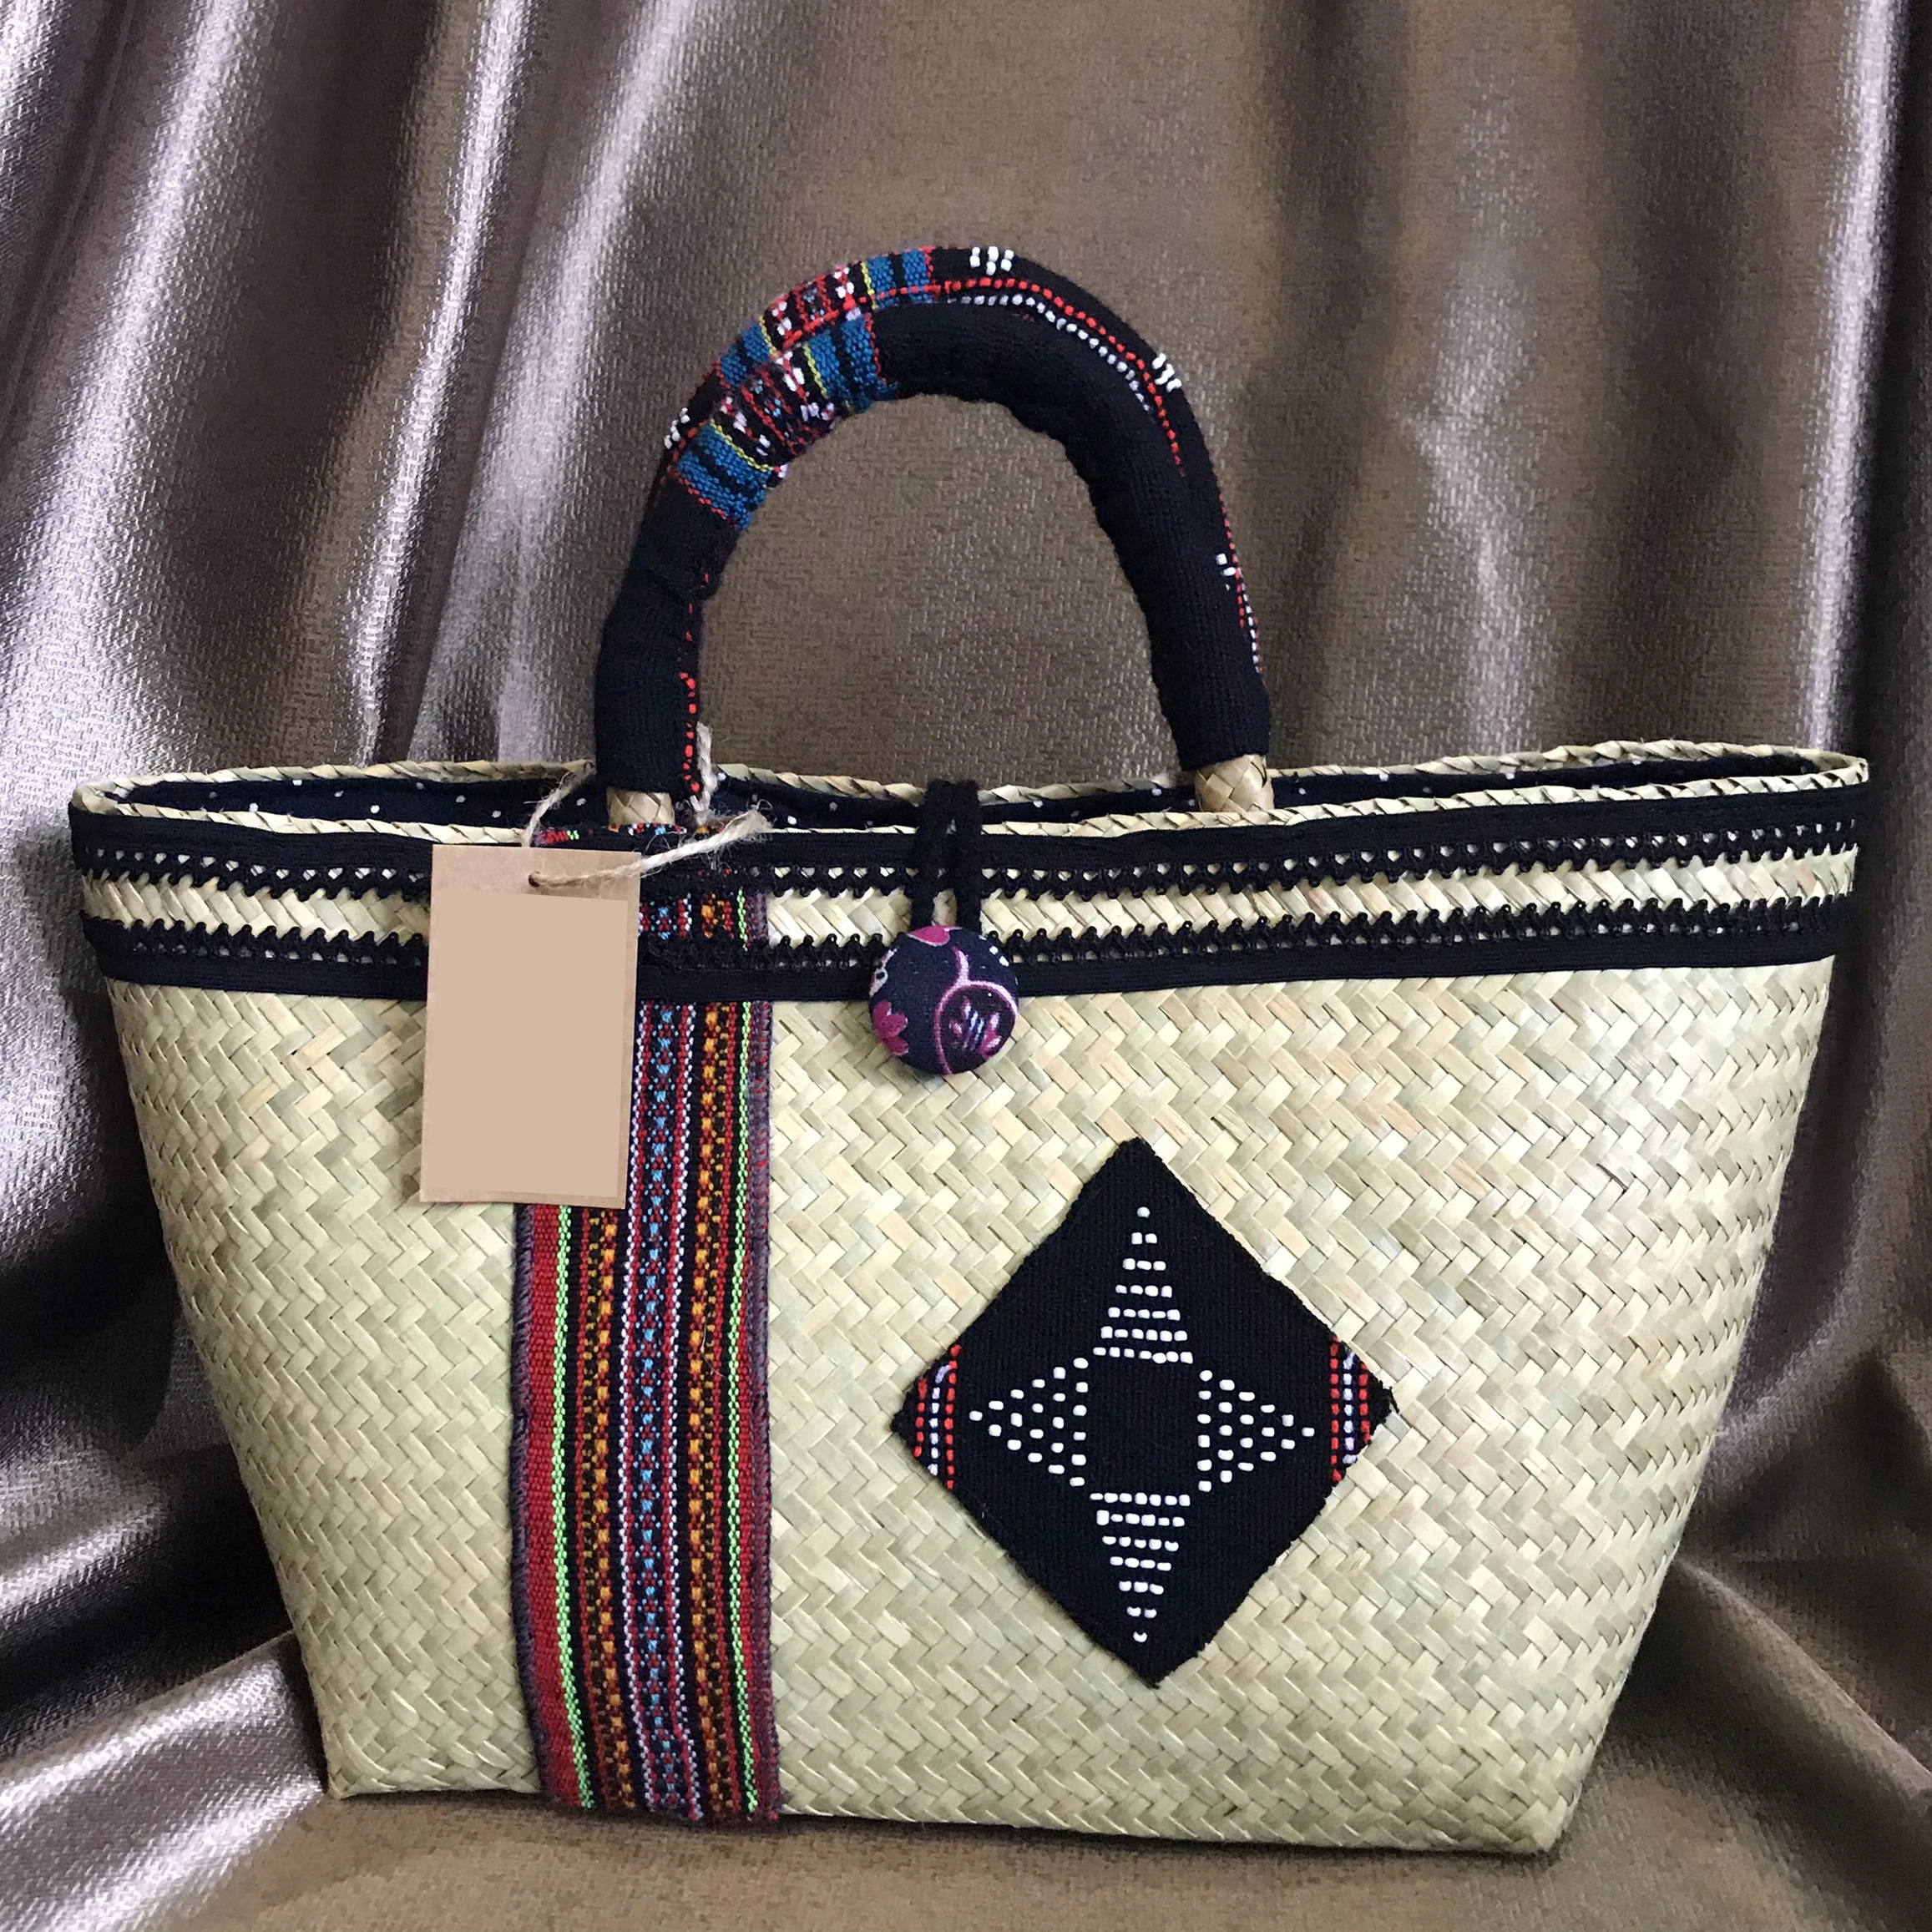 New design sedge handbag on sale 75